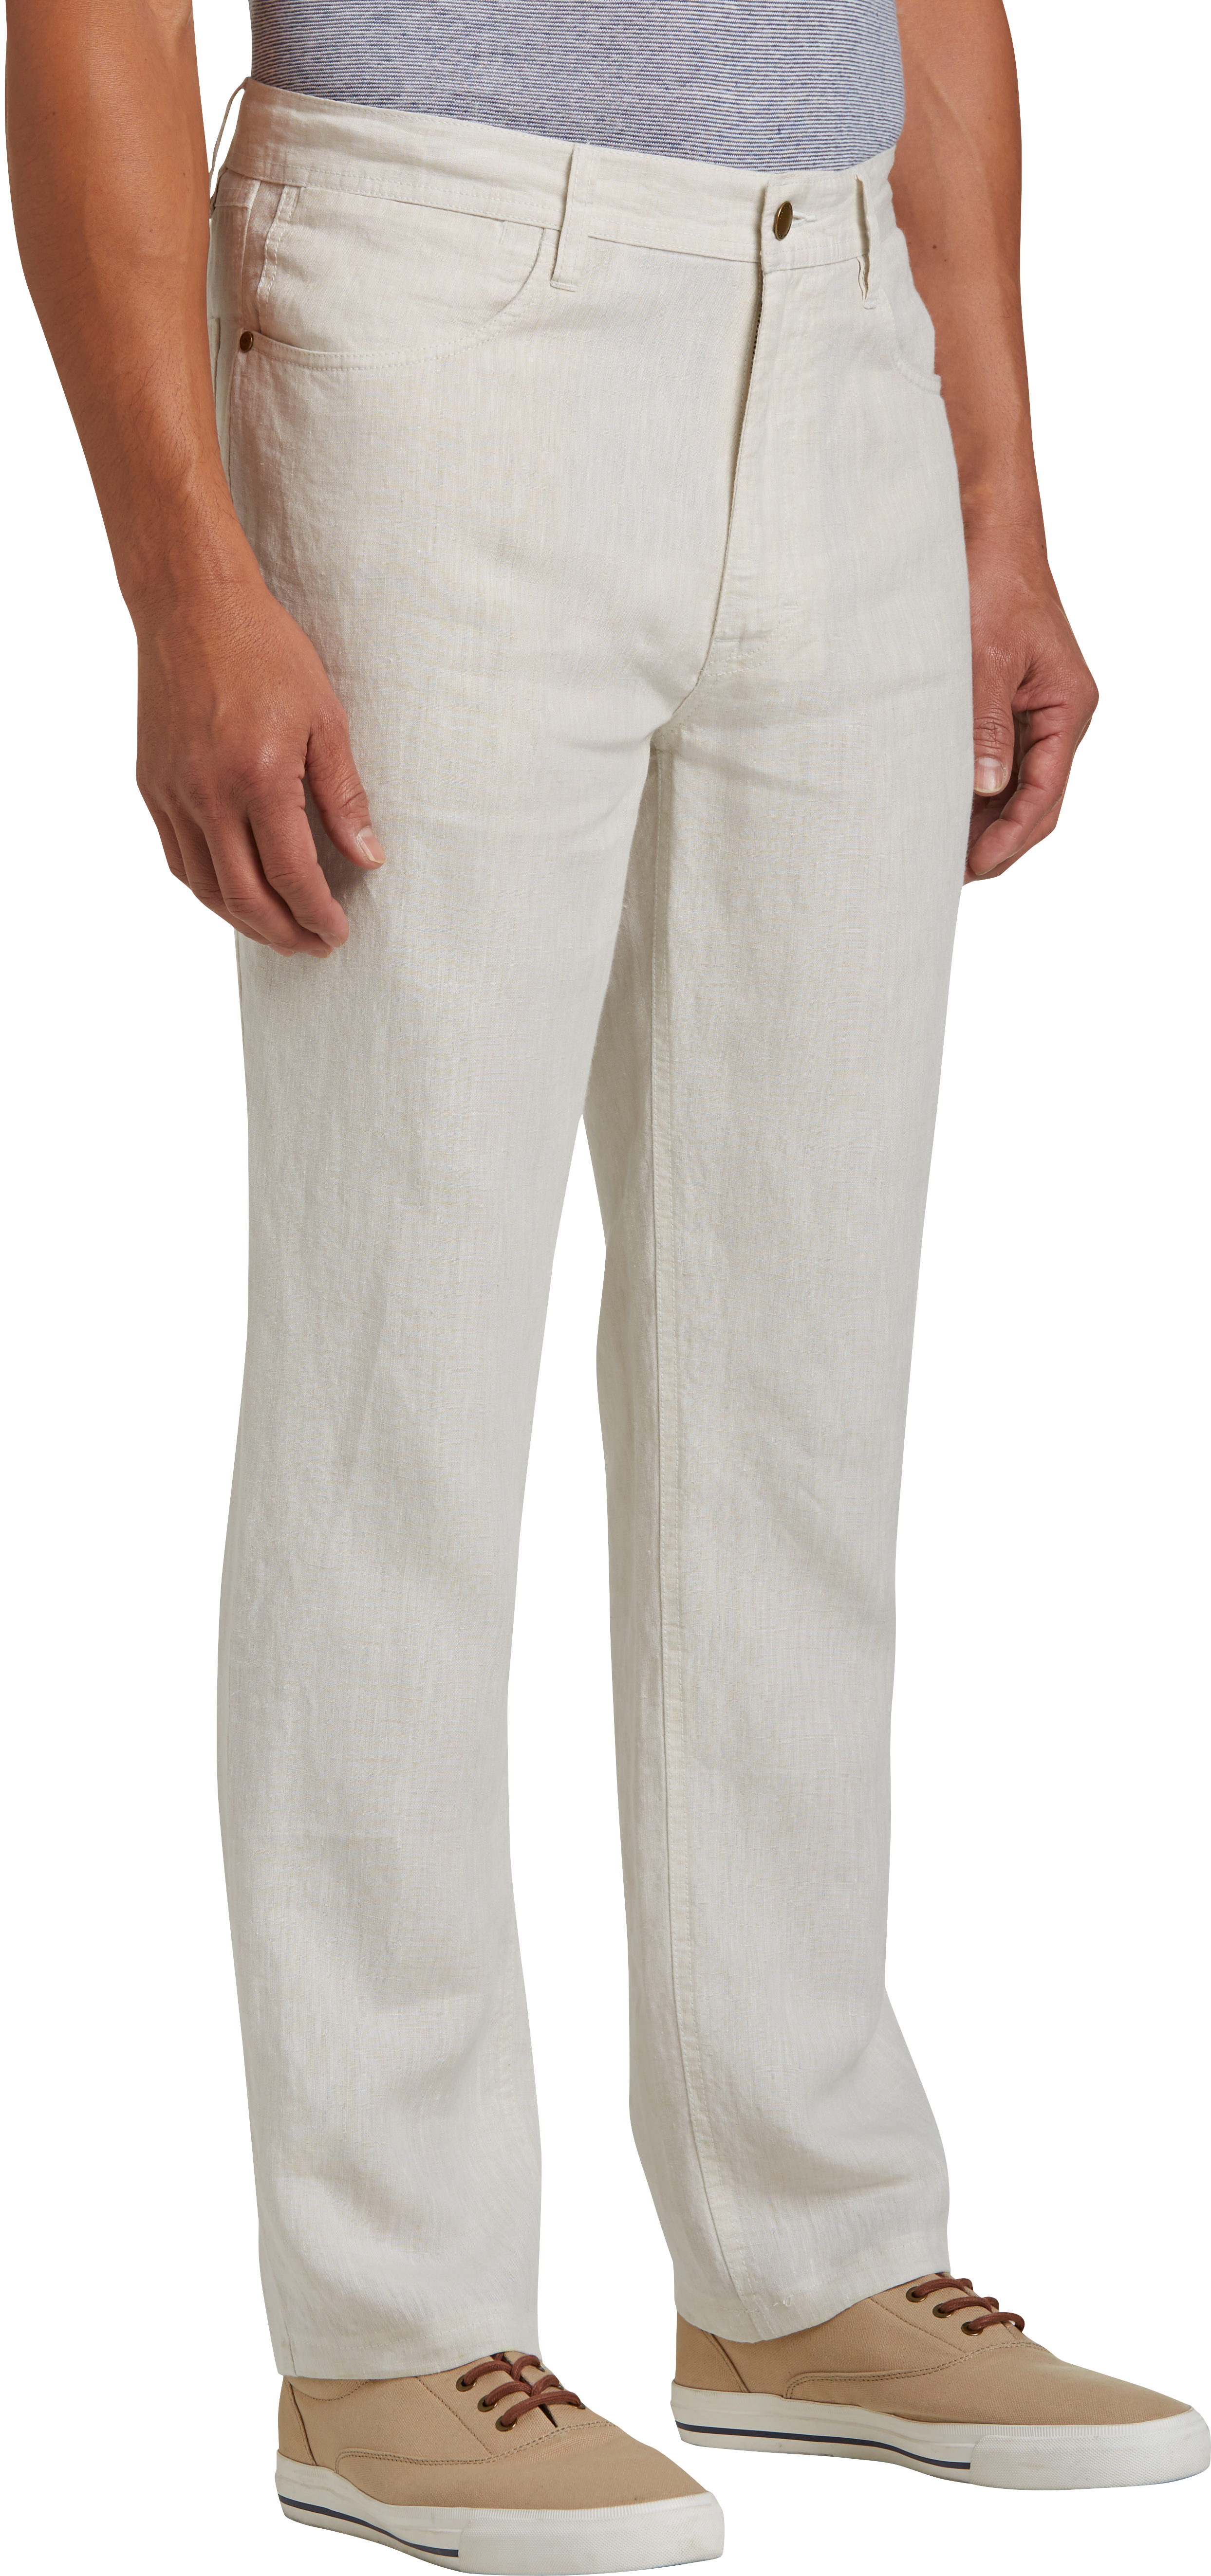 Joseph Abboud Ivory Modern Fit Linen Pants - Men's Sale | Men's Wearhouse